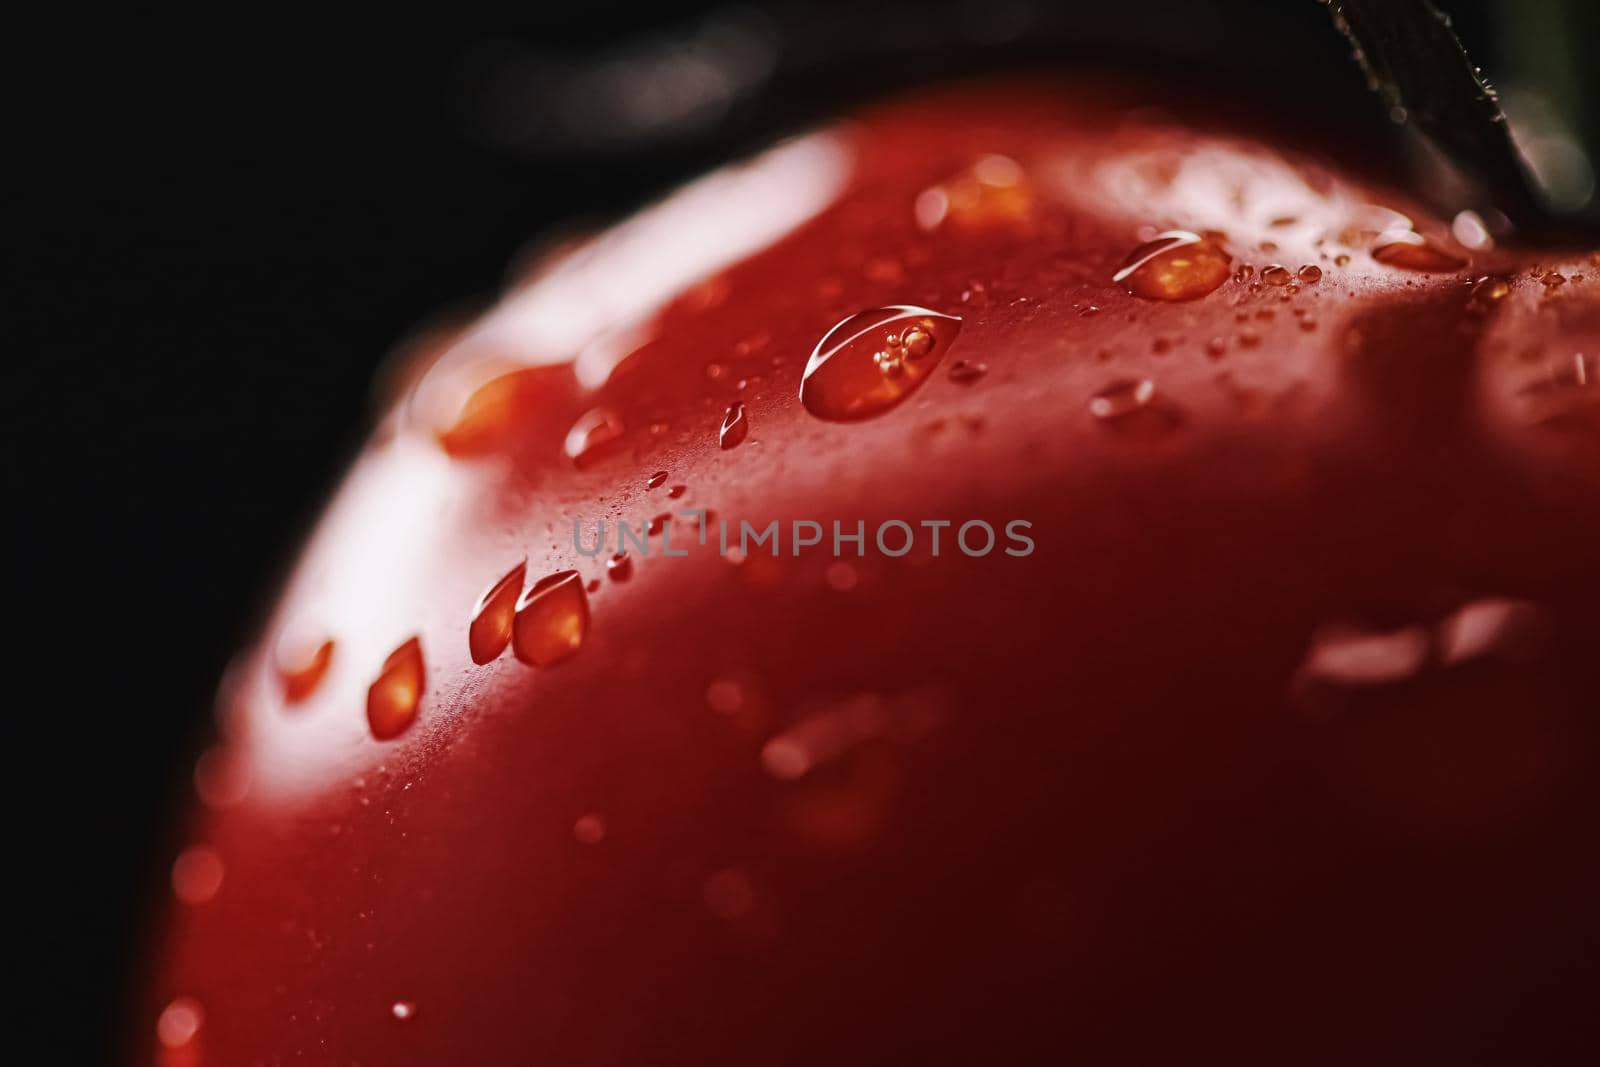 Fresh ripe tomato, organic food closeup